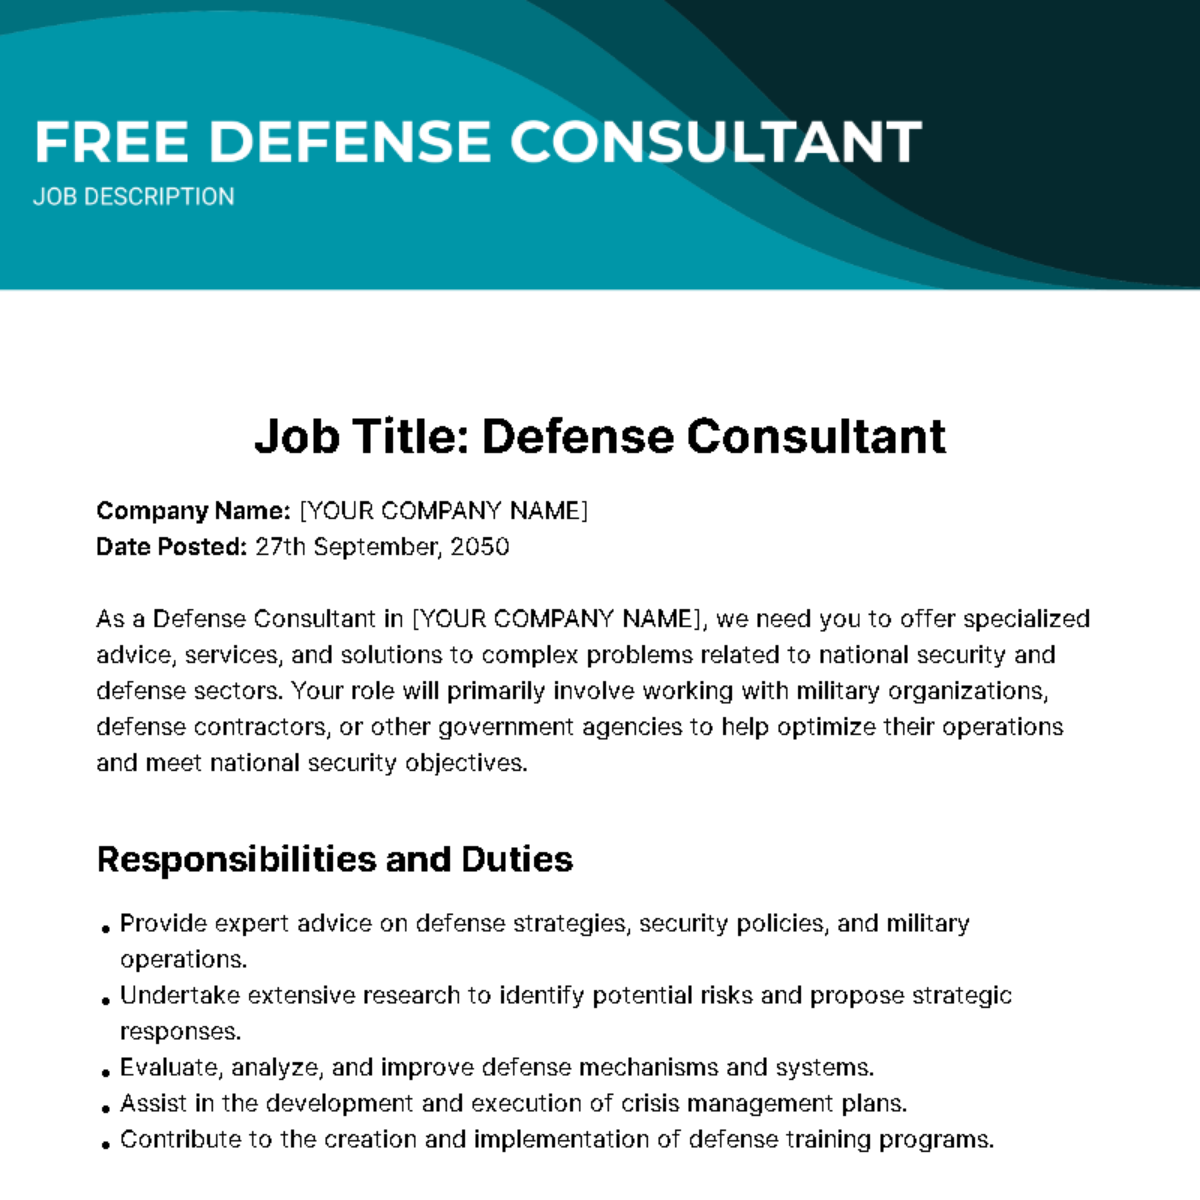 Free Defense Consultant Job Description Template